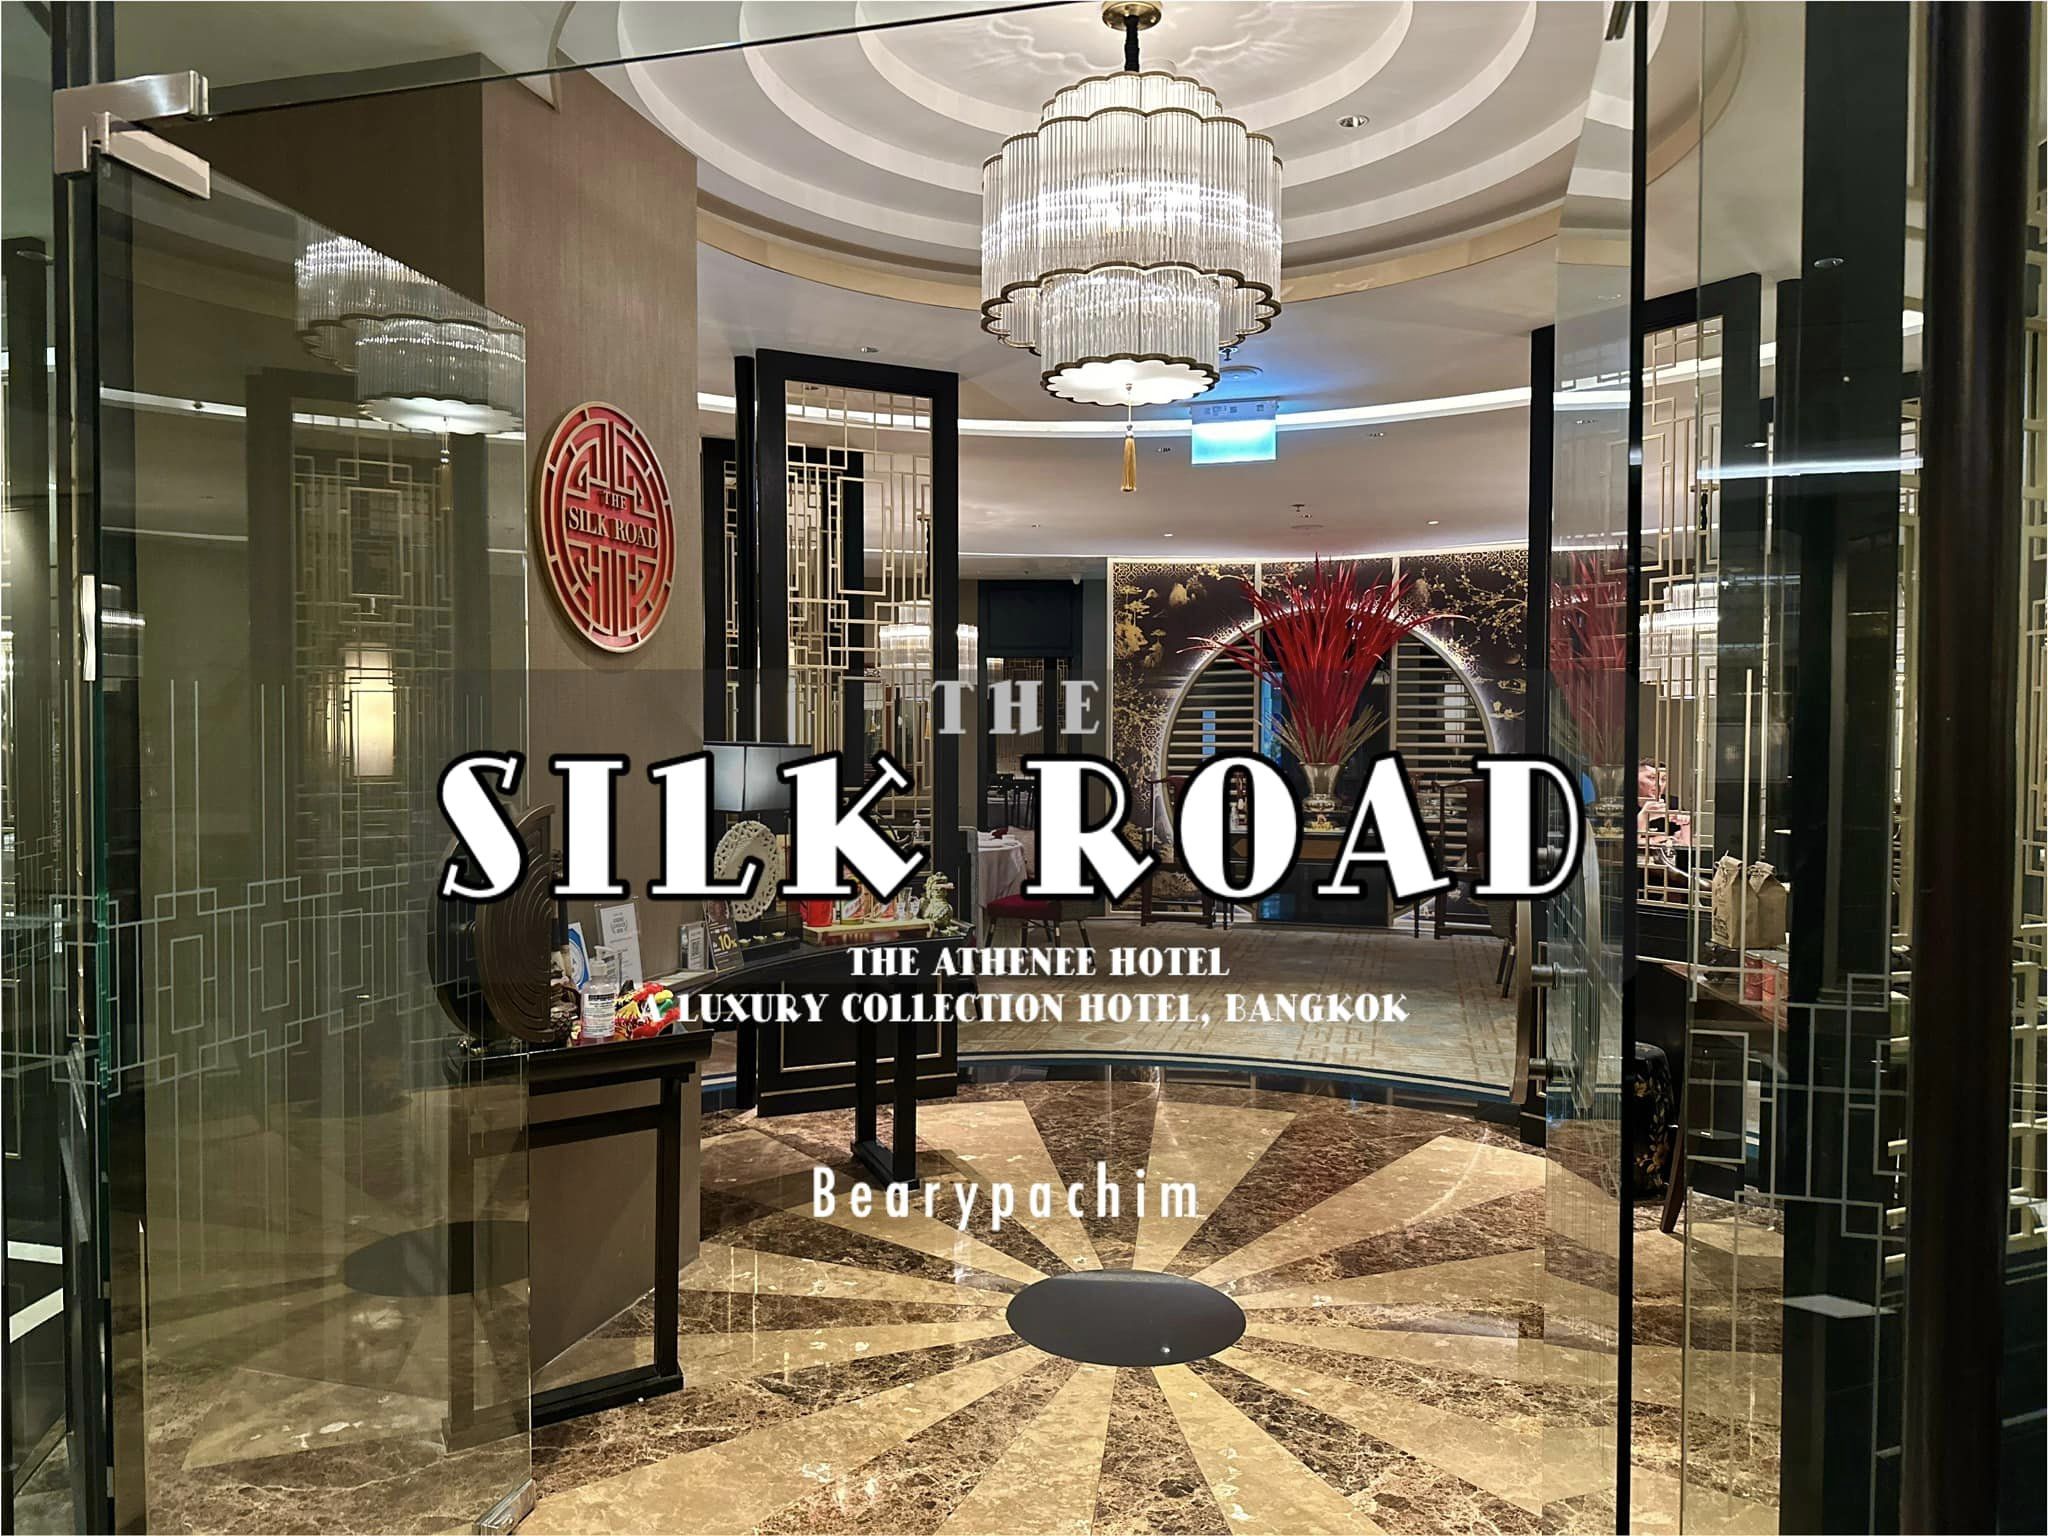 The Silk Road The Athenee Hotel | Bearyพาชิม เรื่องกินไว้ใจผม